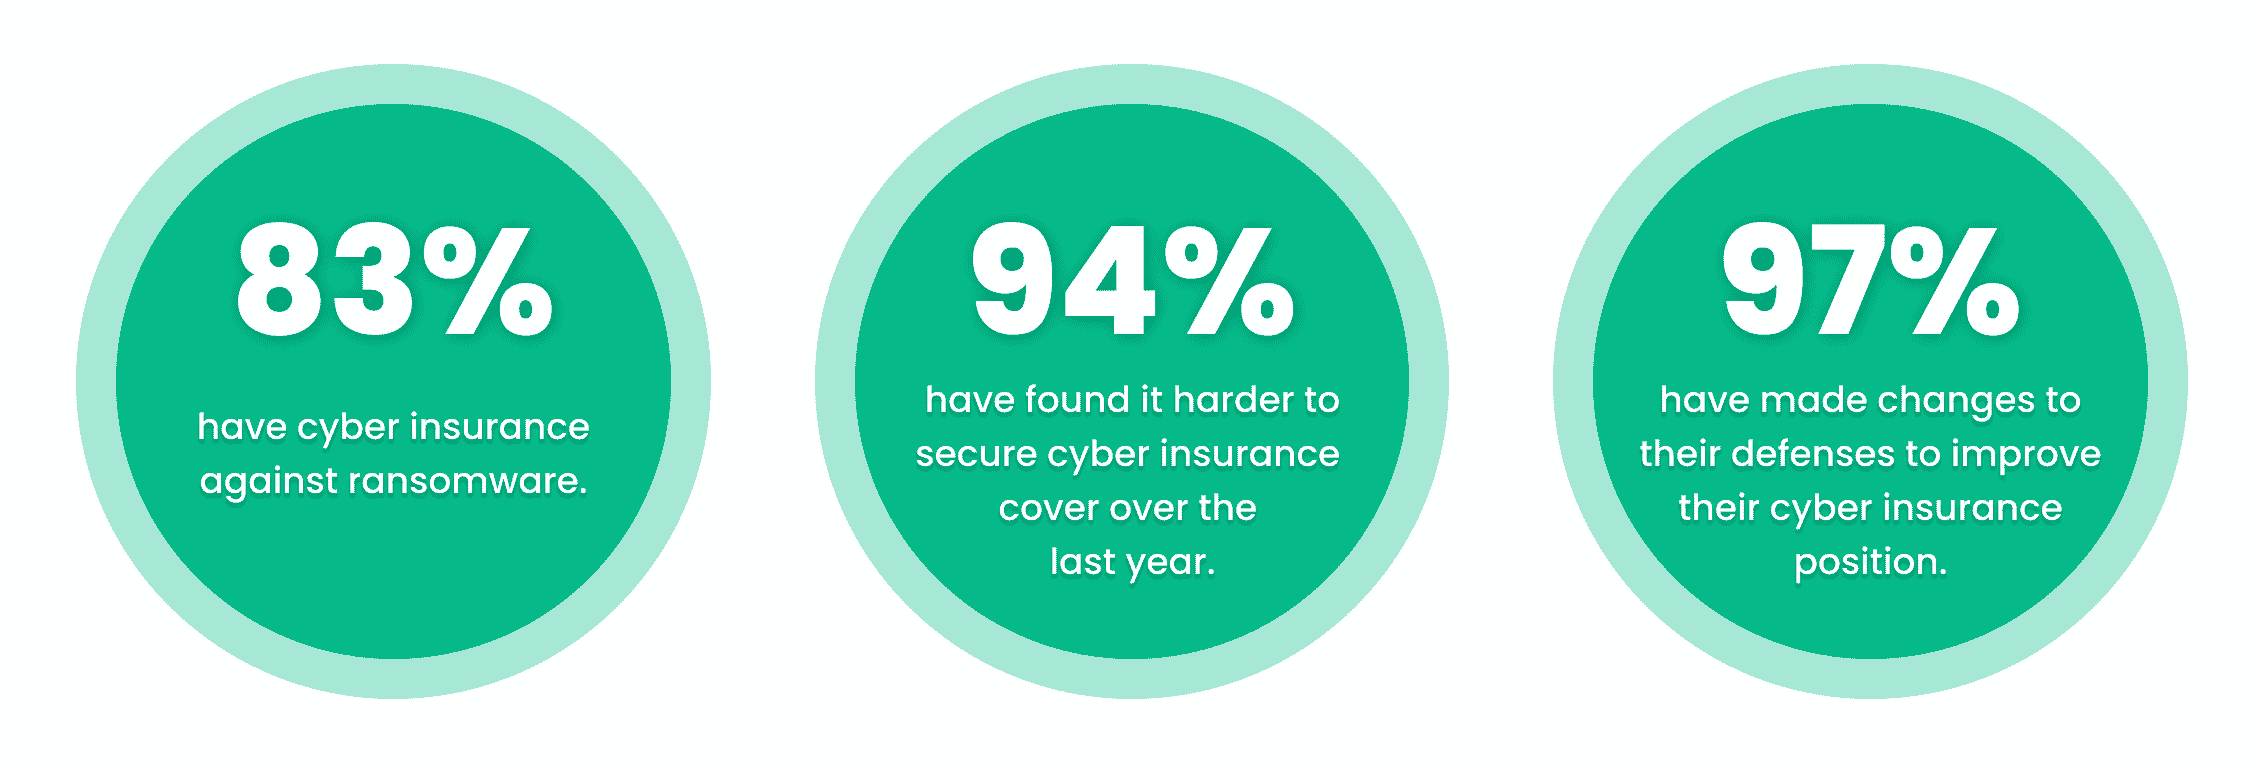 Cyber insurance take-up